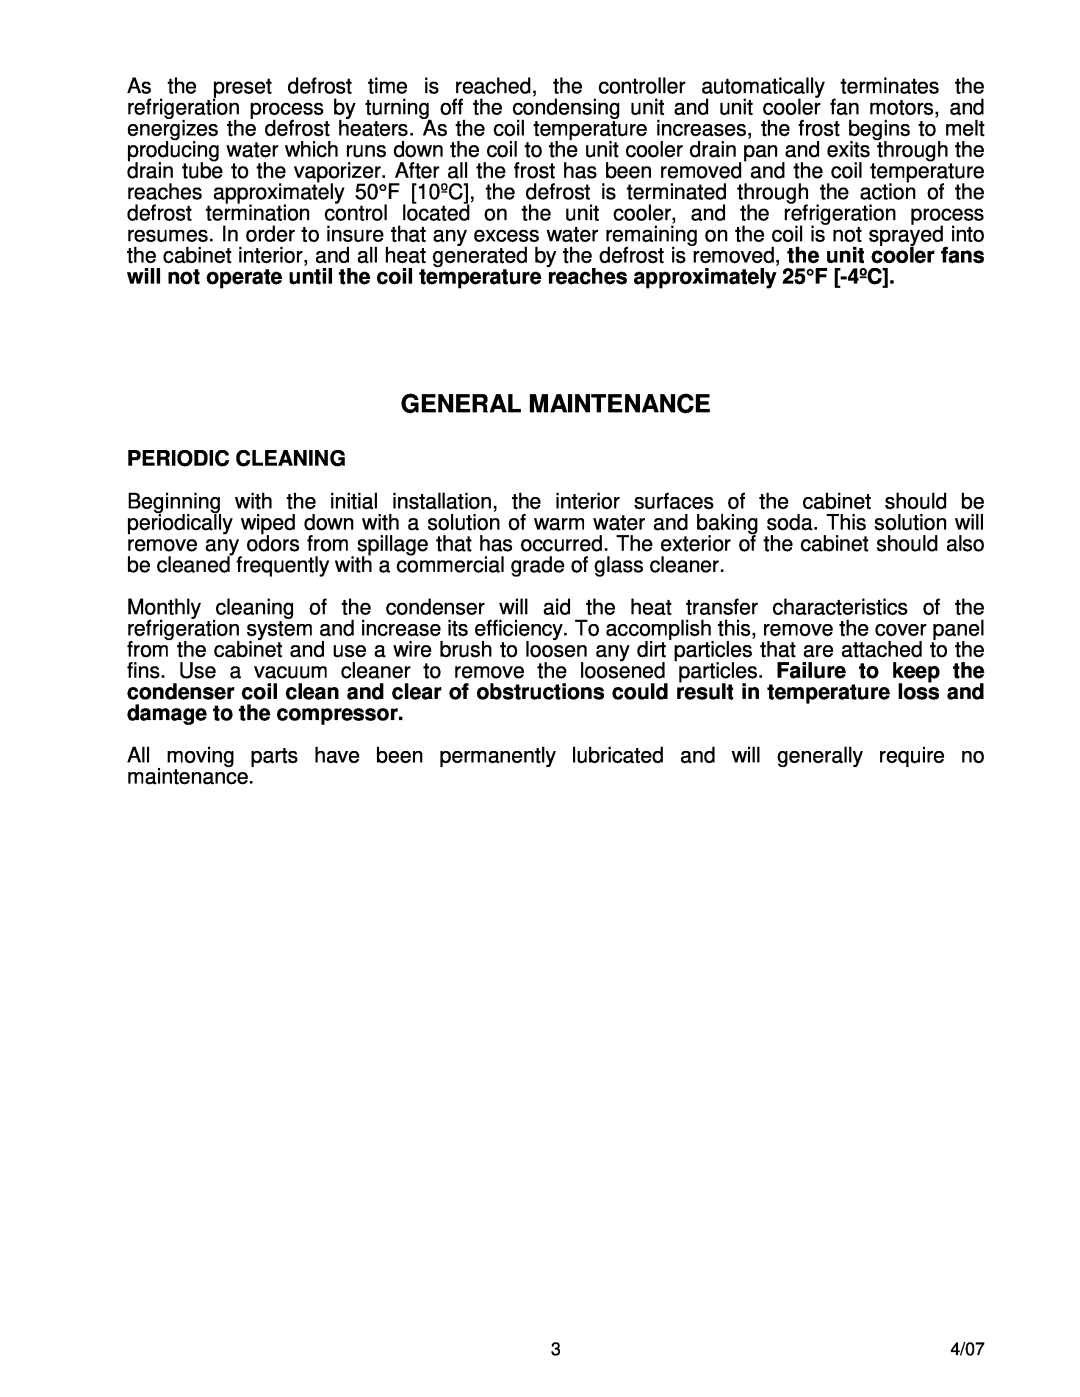 Master Bilt BSD Series manual General Maintenance, Periodic Cleaning 